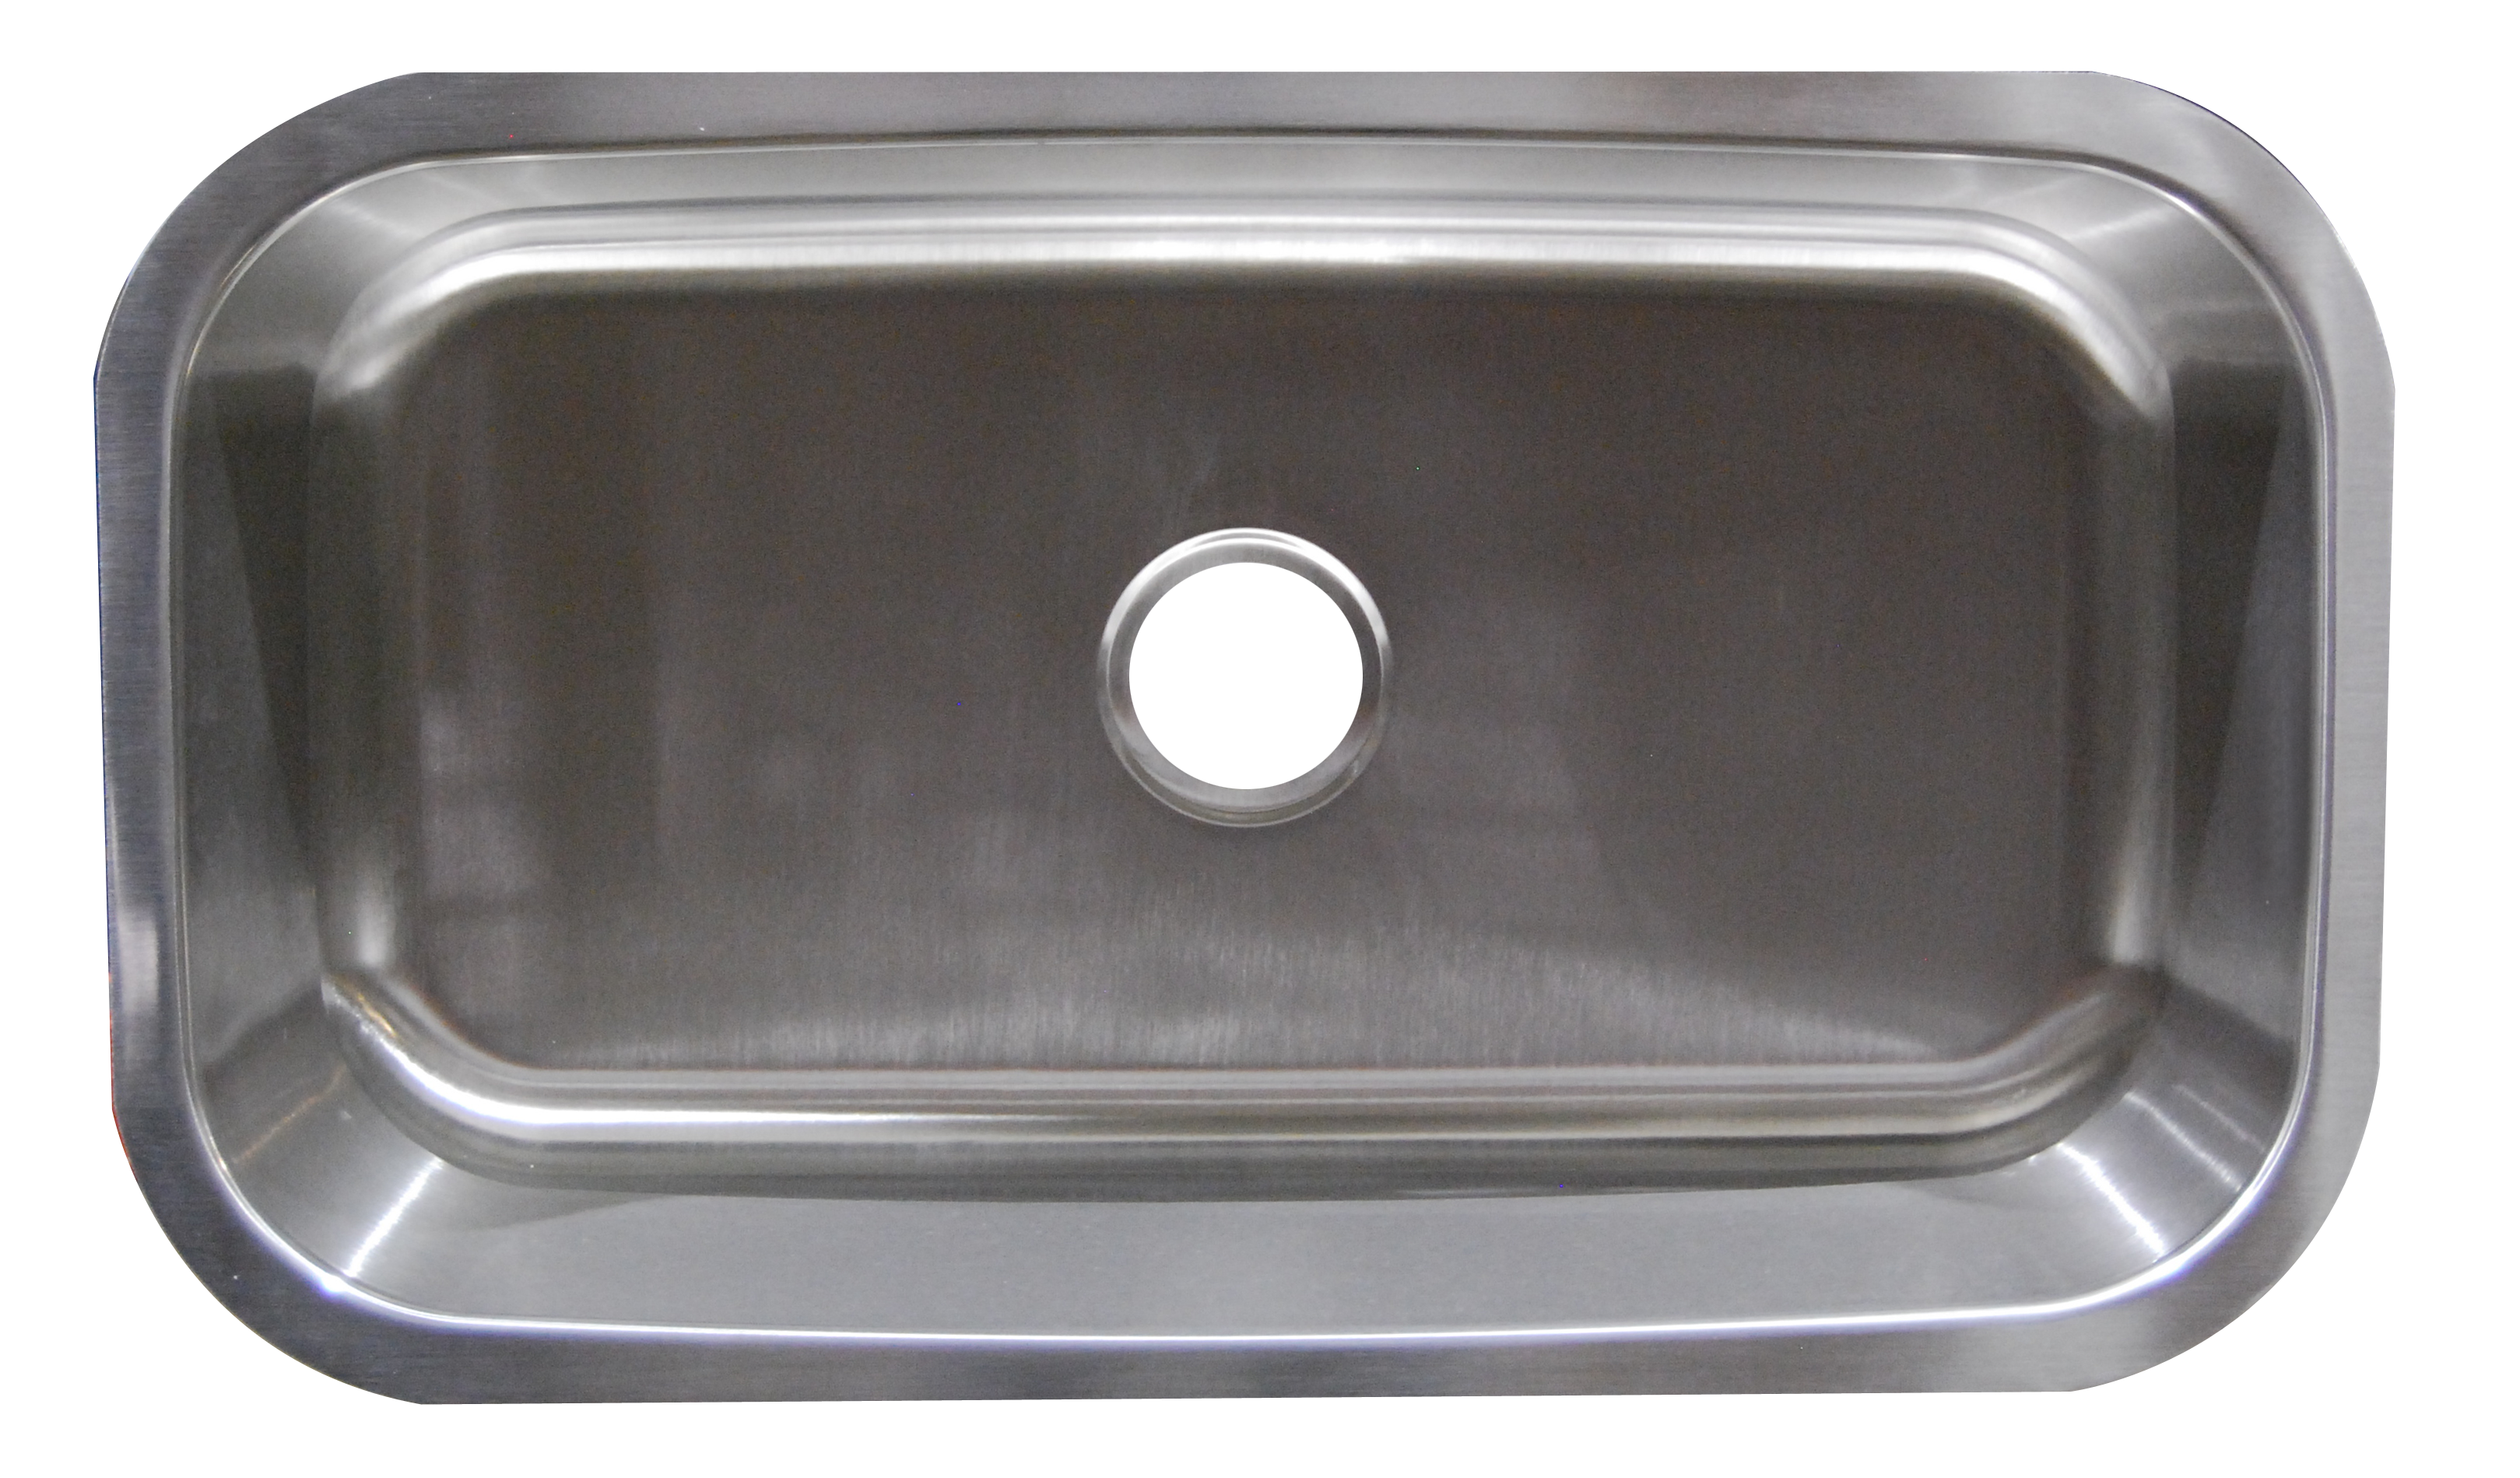 clipart kitchen basin